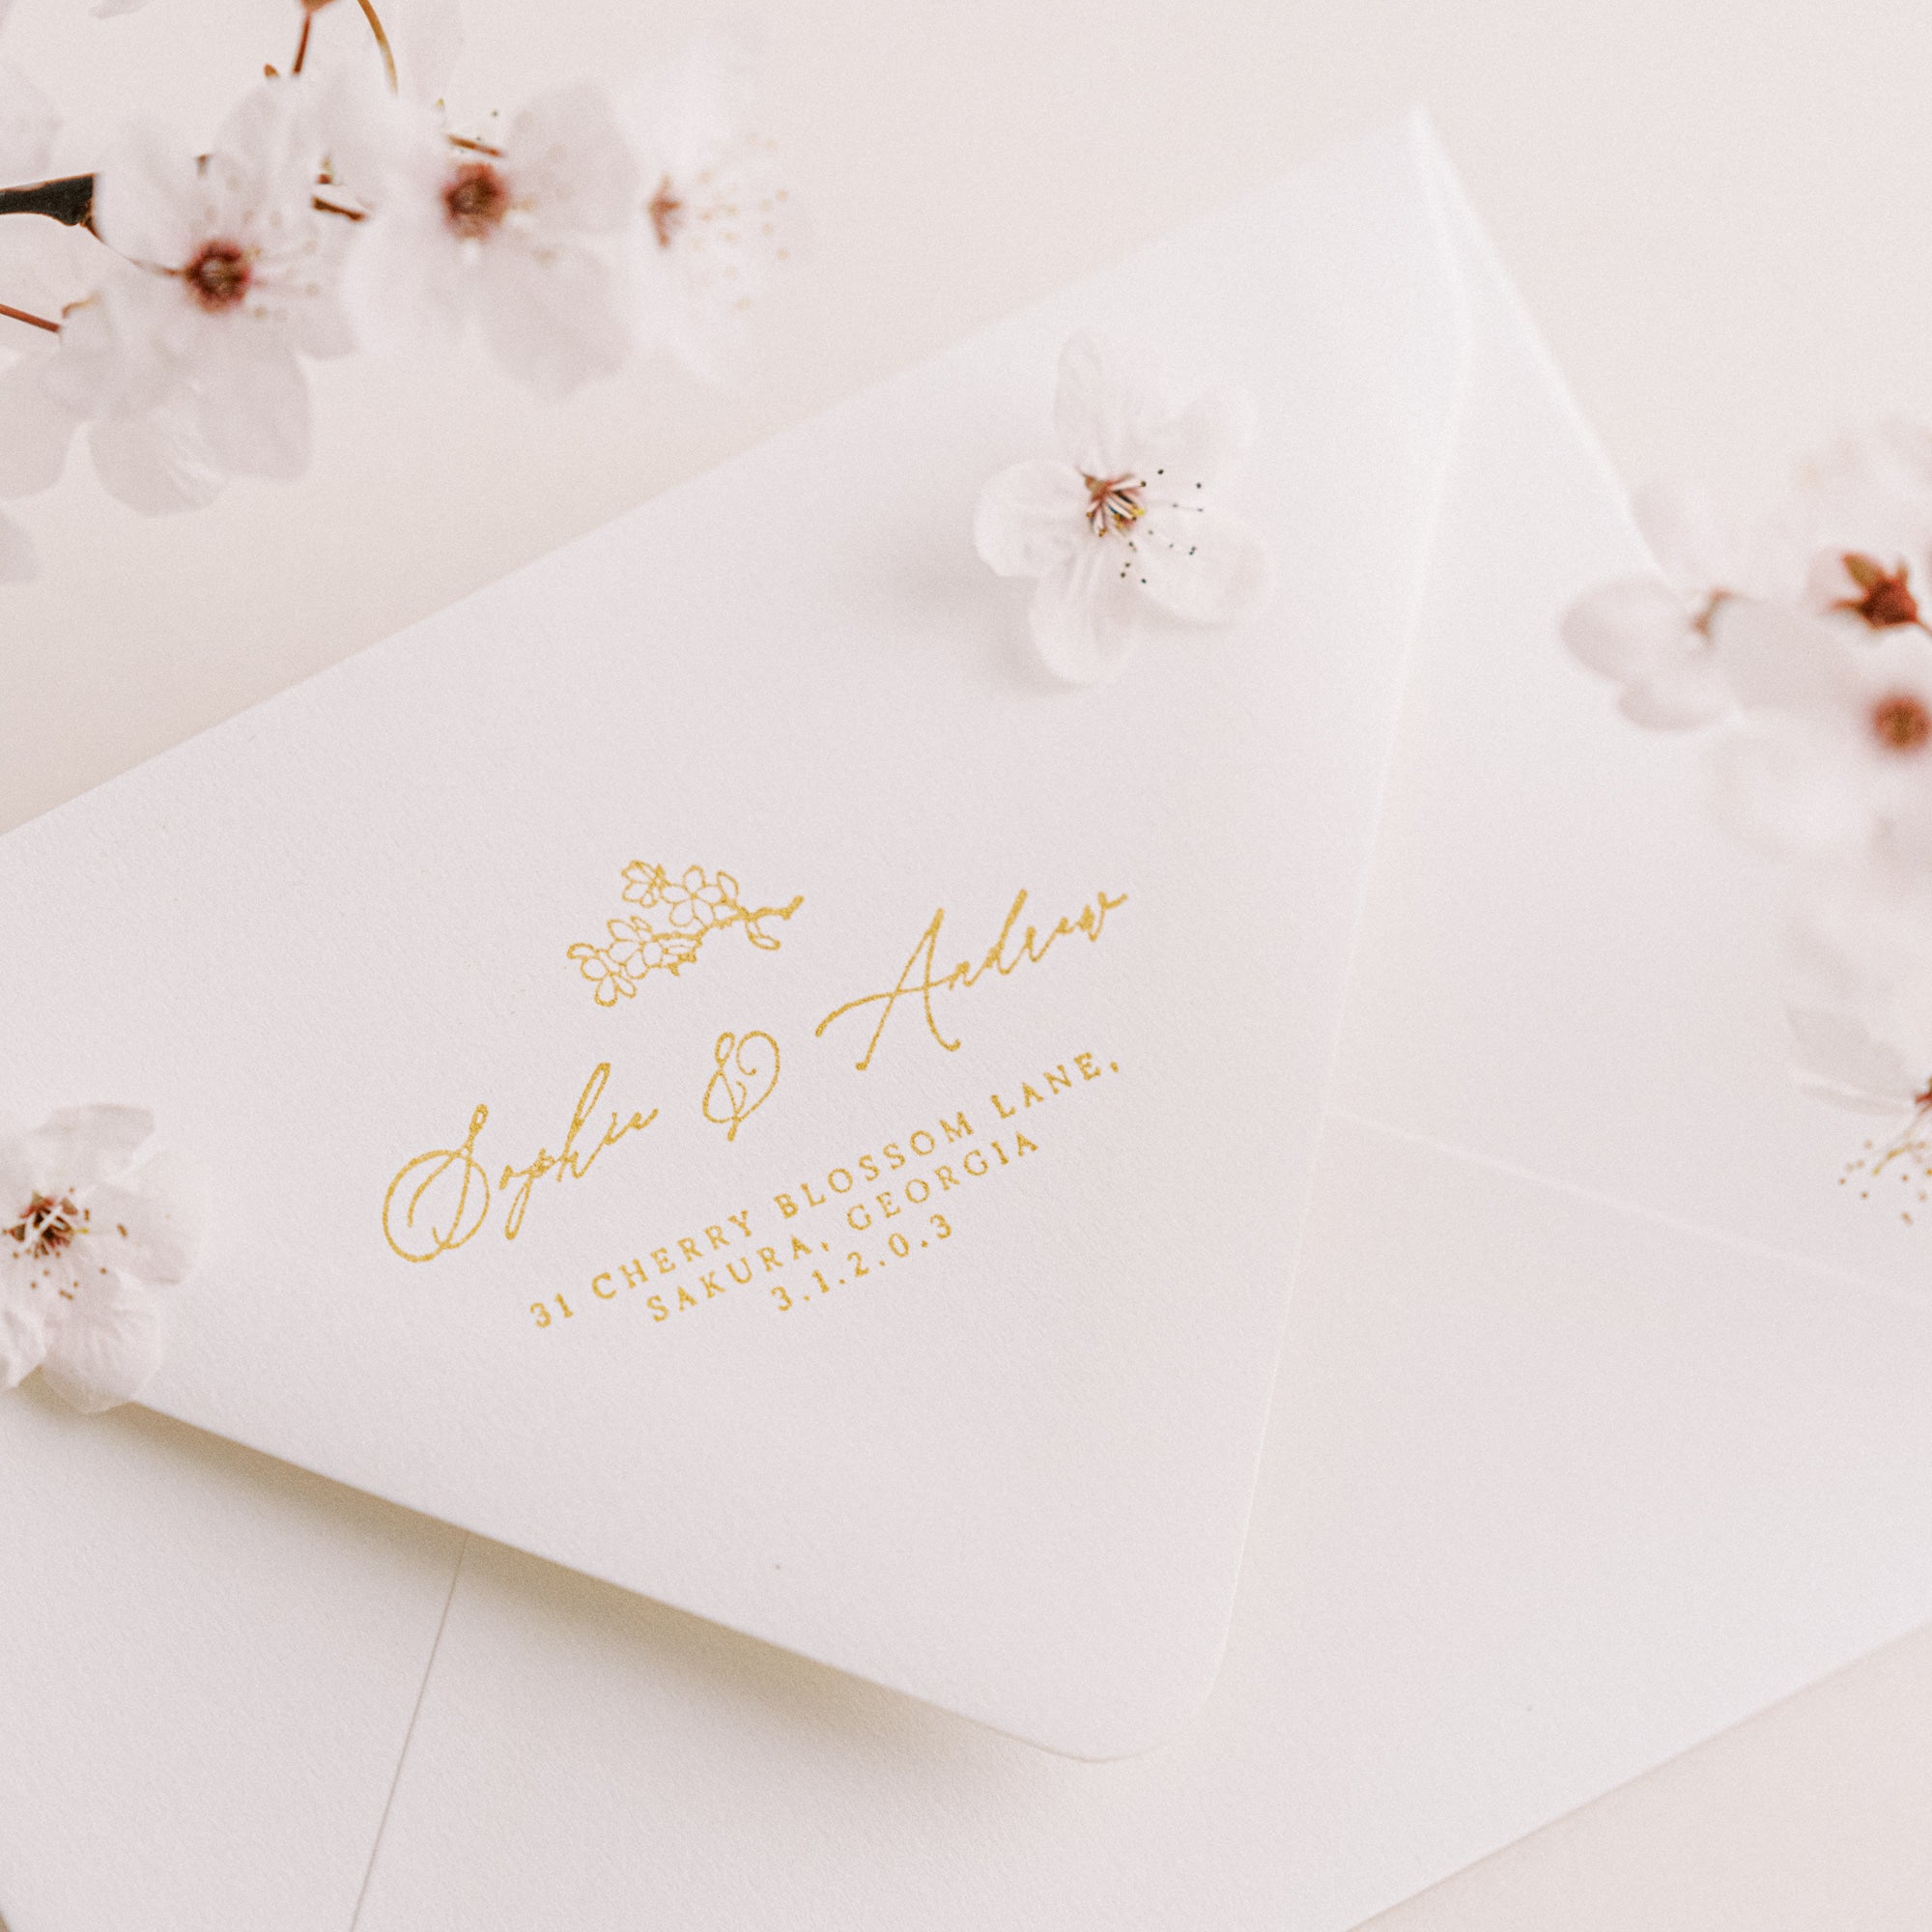 Misaki Cherry Blossom Return Address Rubber Stamp for Fine Art Weddings | Cherry Blossom Blush Pink Spring Wedding Inspiration | Heirloom Seals